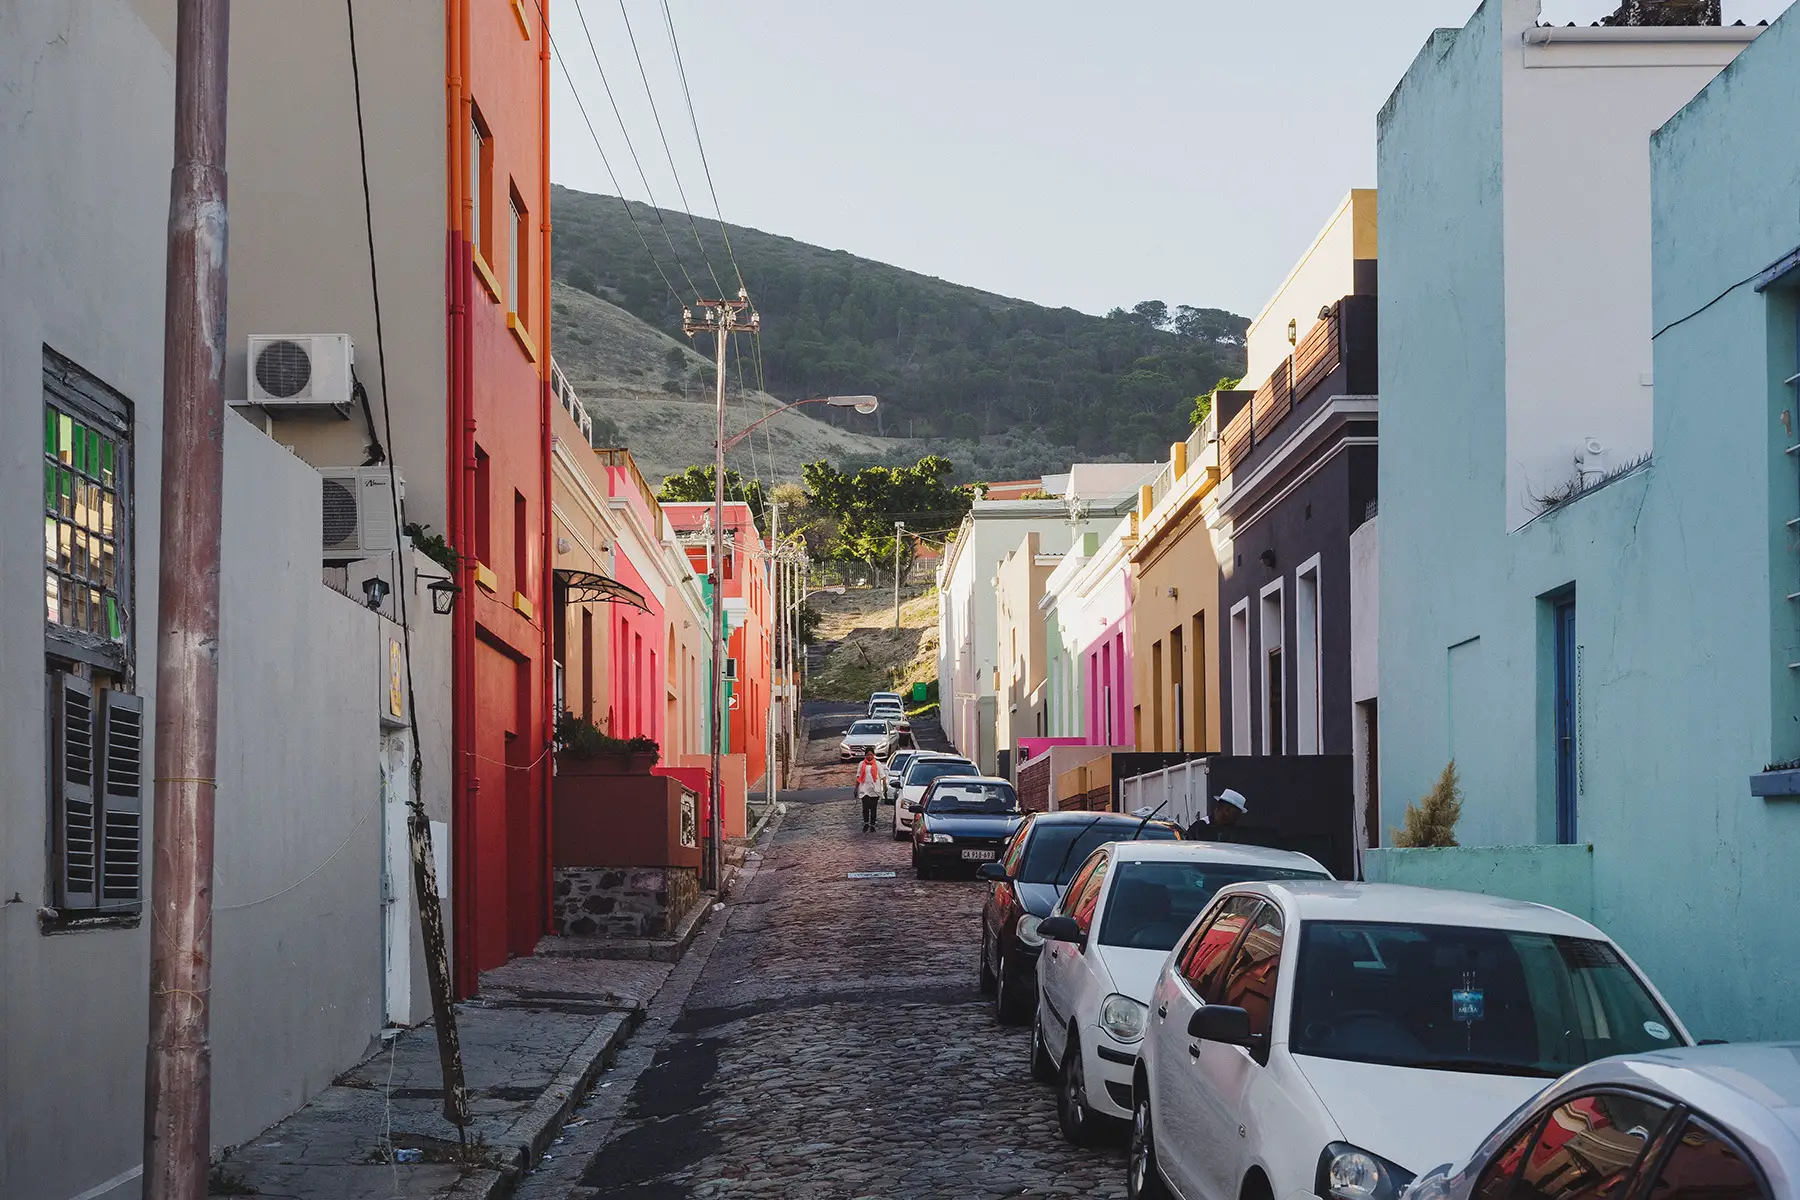 Houses in the Bo-Kaap neighborhood of Cape Town